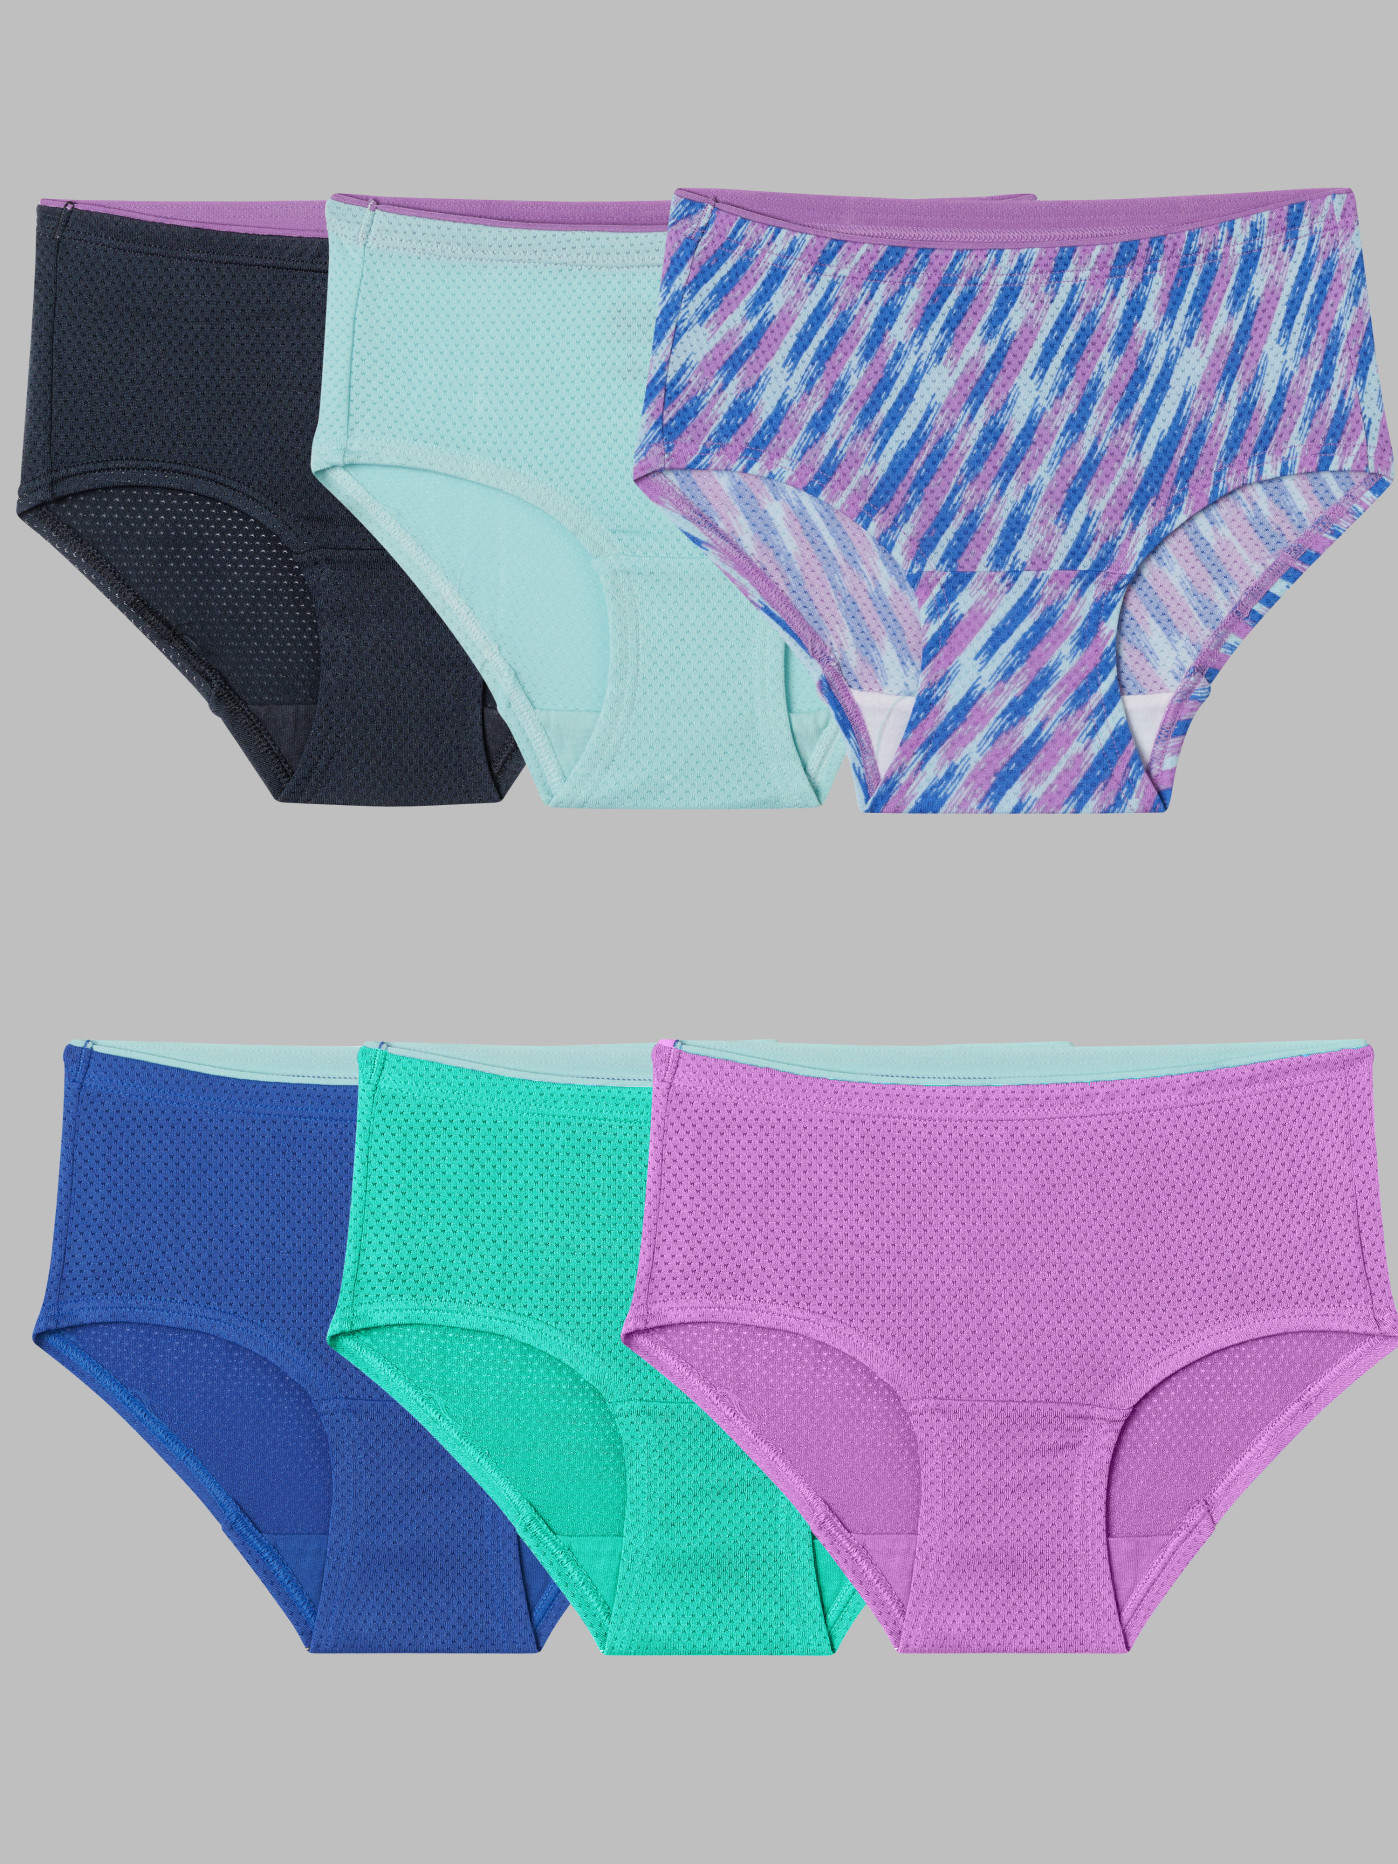 Girls Underwear Breathable Cotton Panties Stretch Soft Briefs Panties  Underwear For Girls Teens 5 Pack